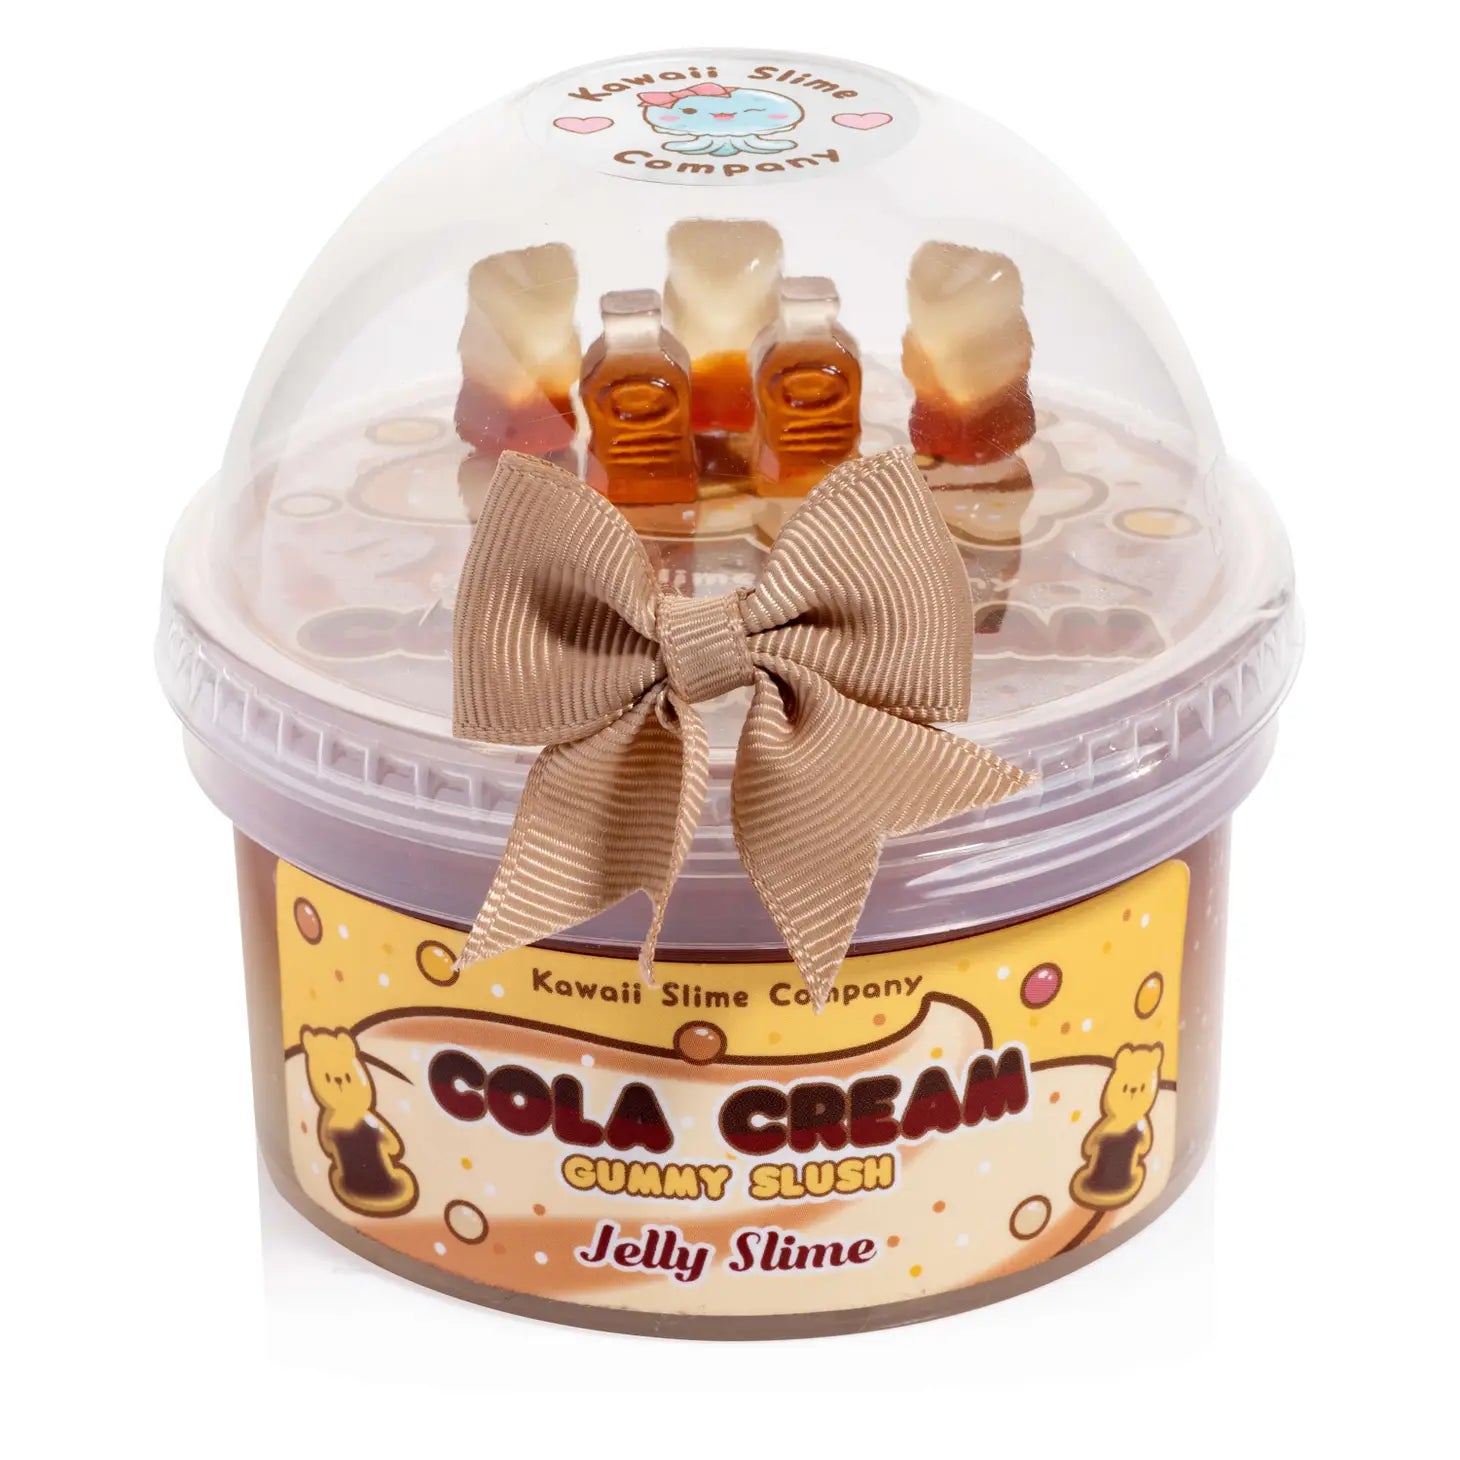 Cola Cream Gummy Slush Jelly Slime by Kawaii Slime